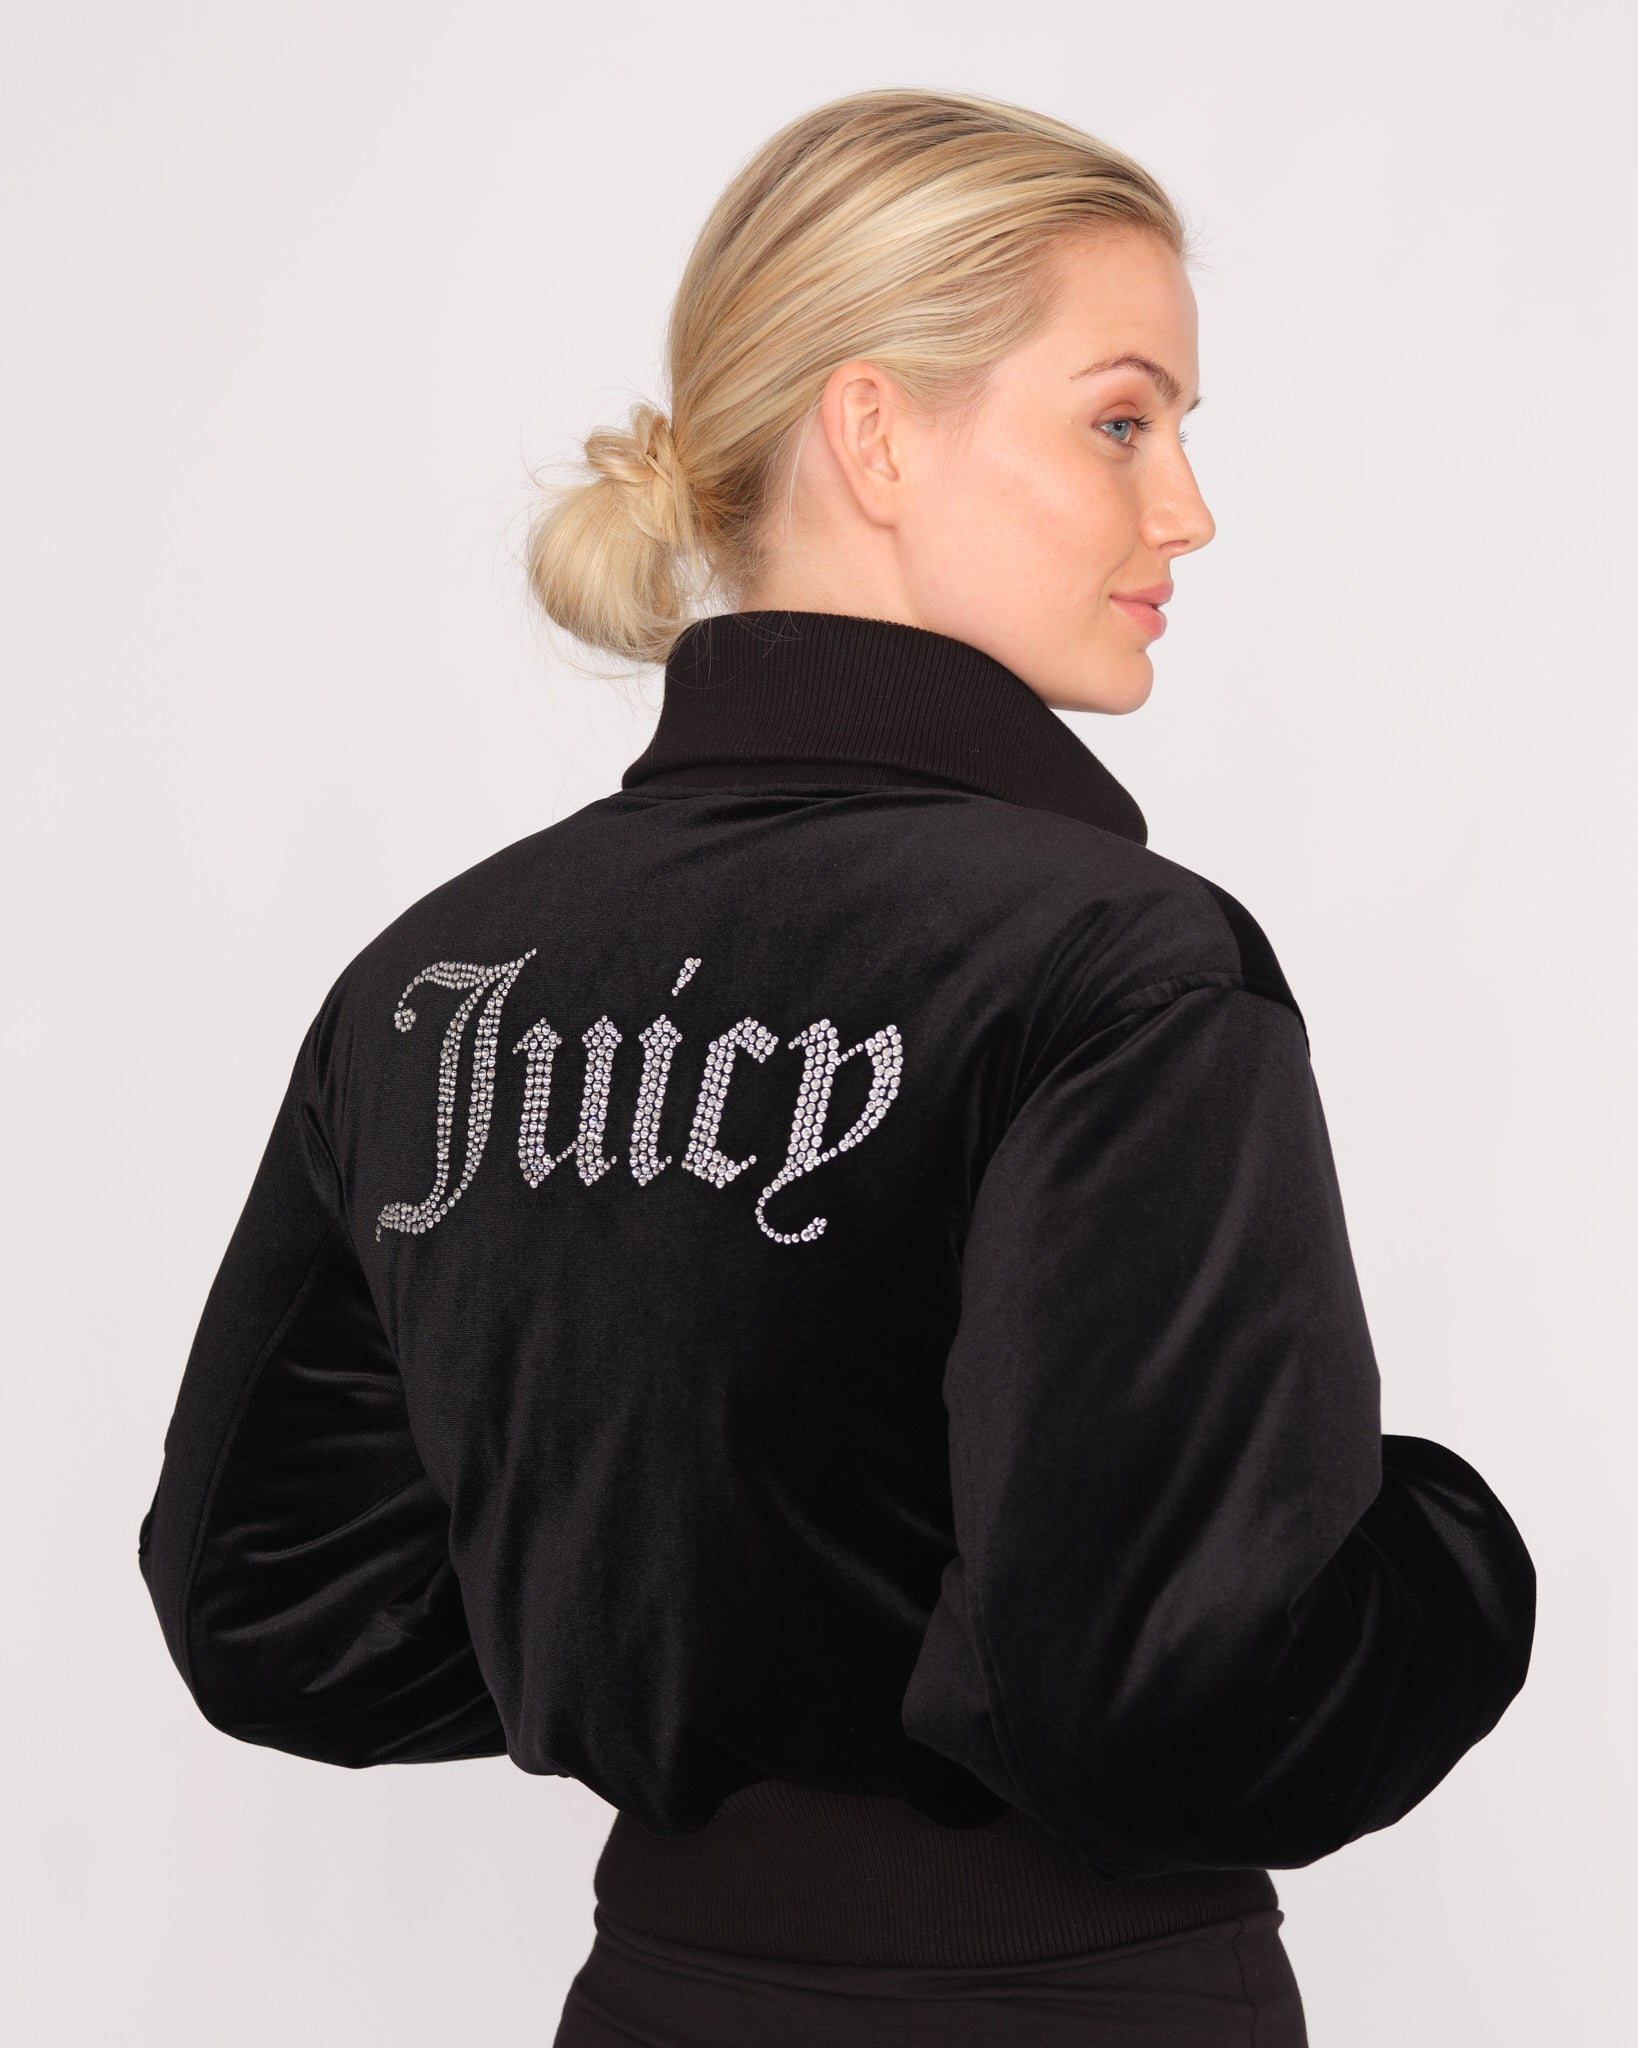 Rydell Diamante Bomber Jacket Black - Juicy Couture Scandinavia